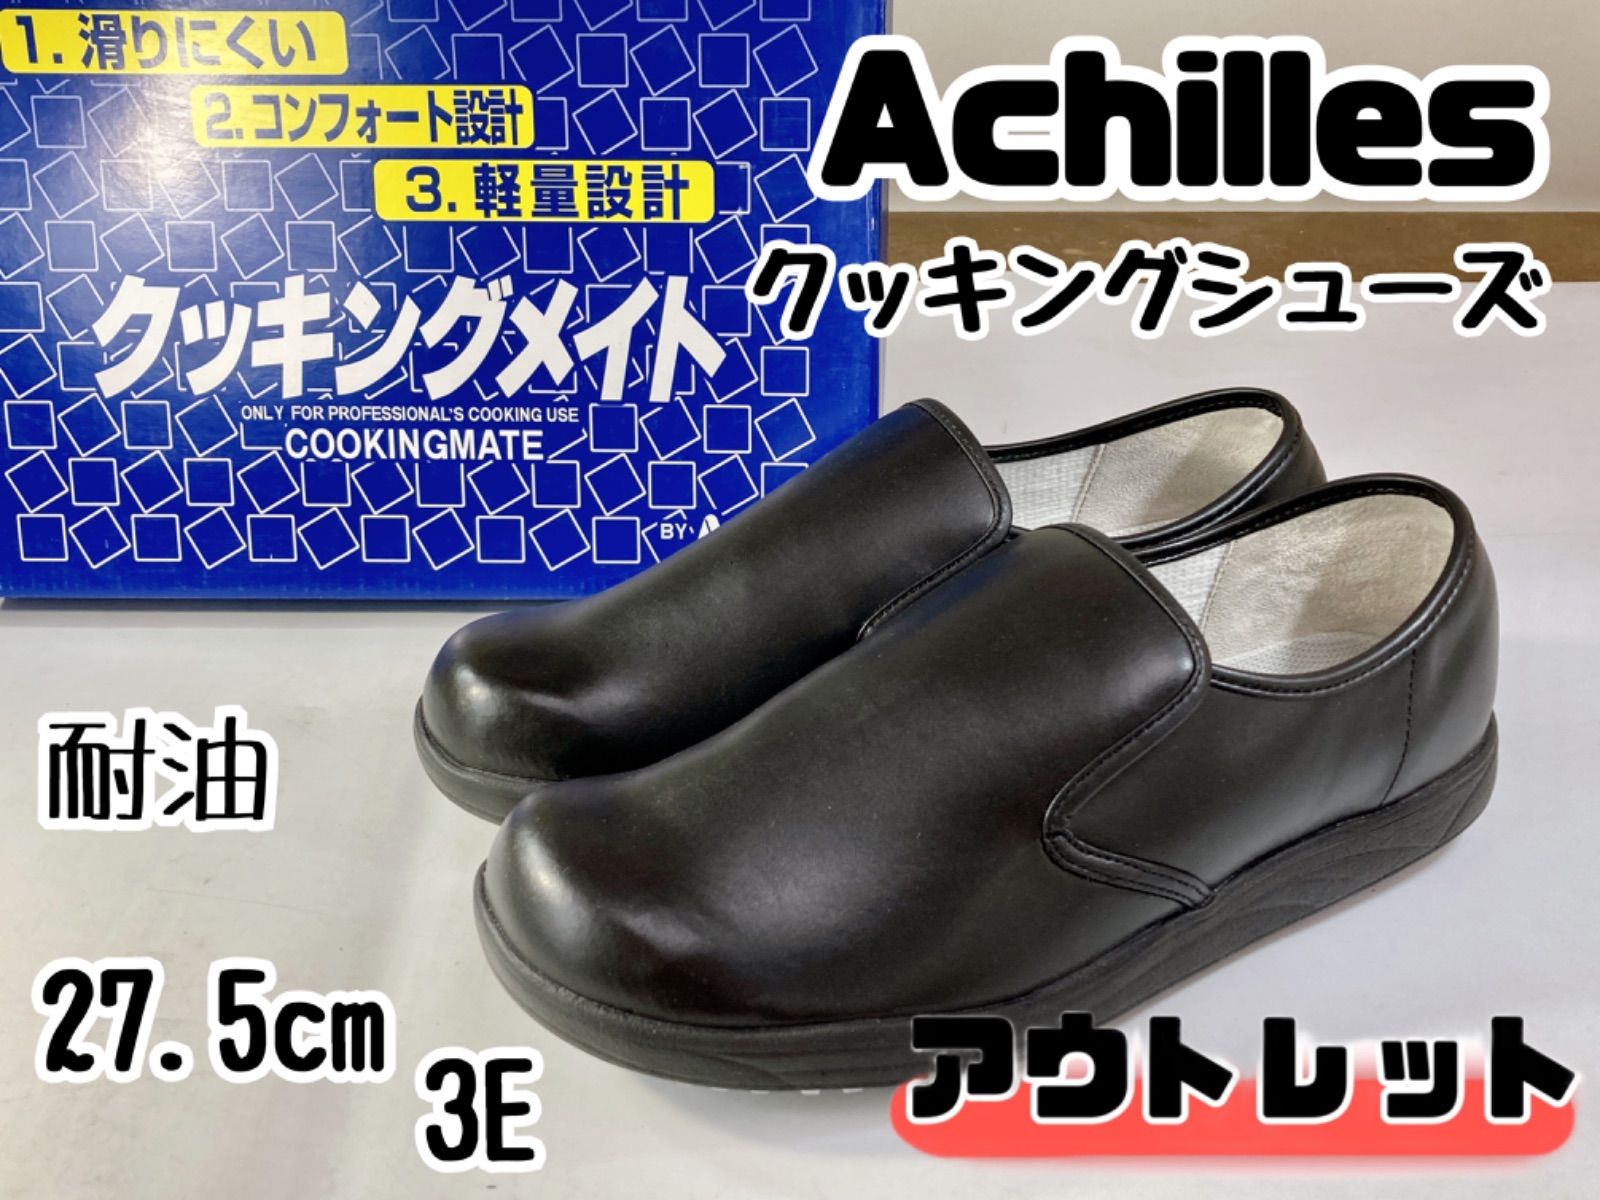 Achilles(アキレス) クッキングメイト9606 白 23cm SKT2703 - 作業靴